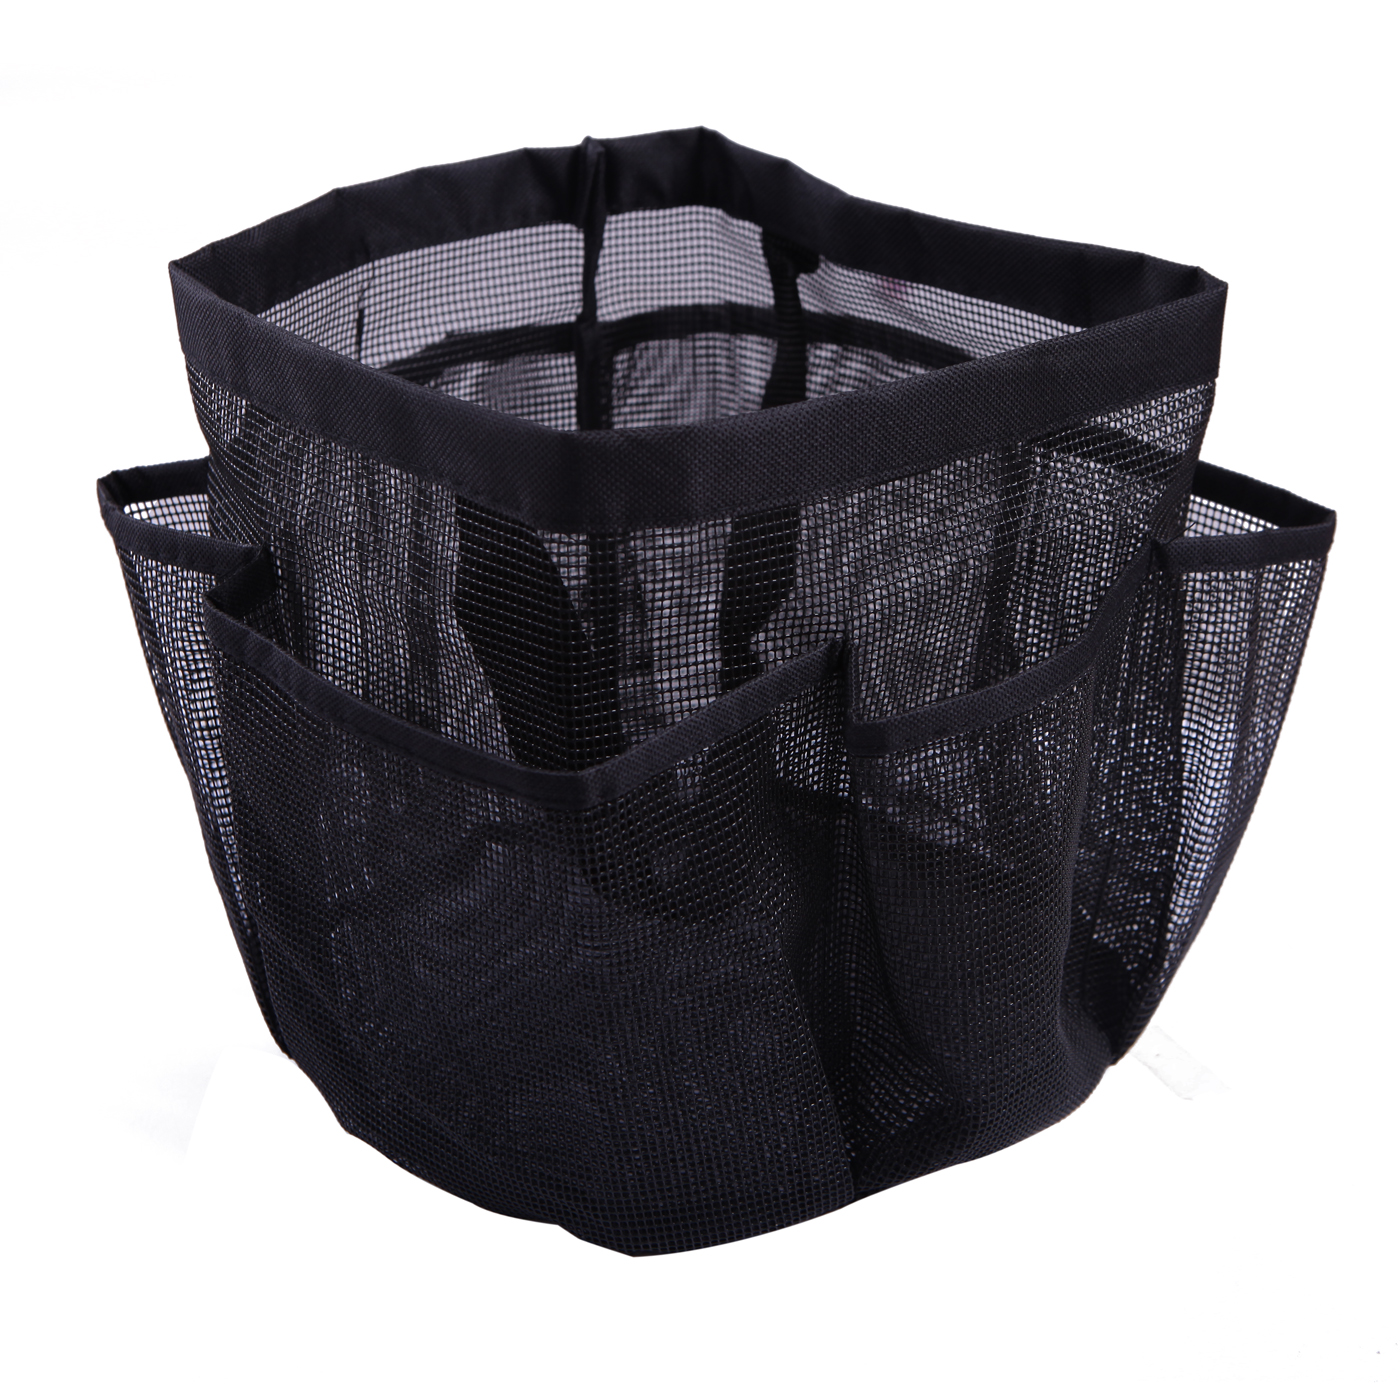 HDE Mesh Shower Bag Caddy Bath Organizer Black - image 2 of 4